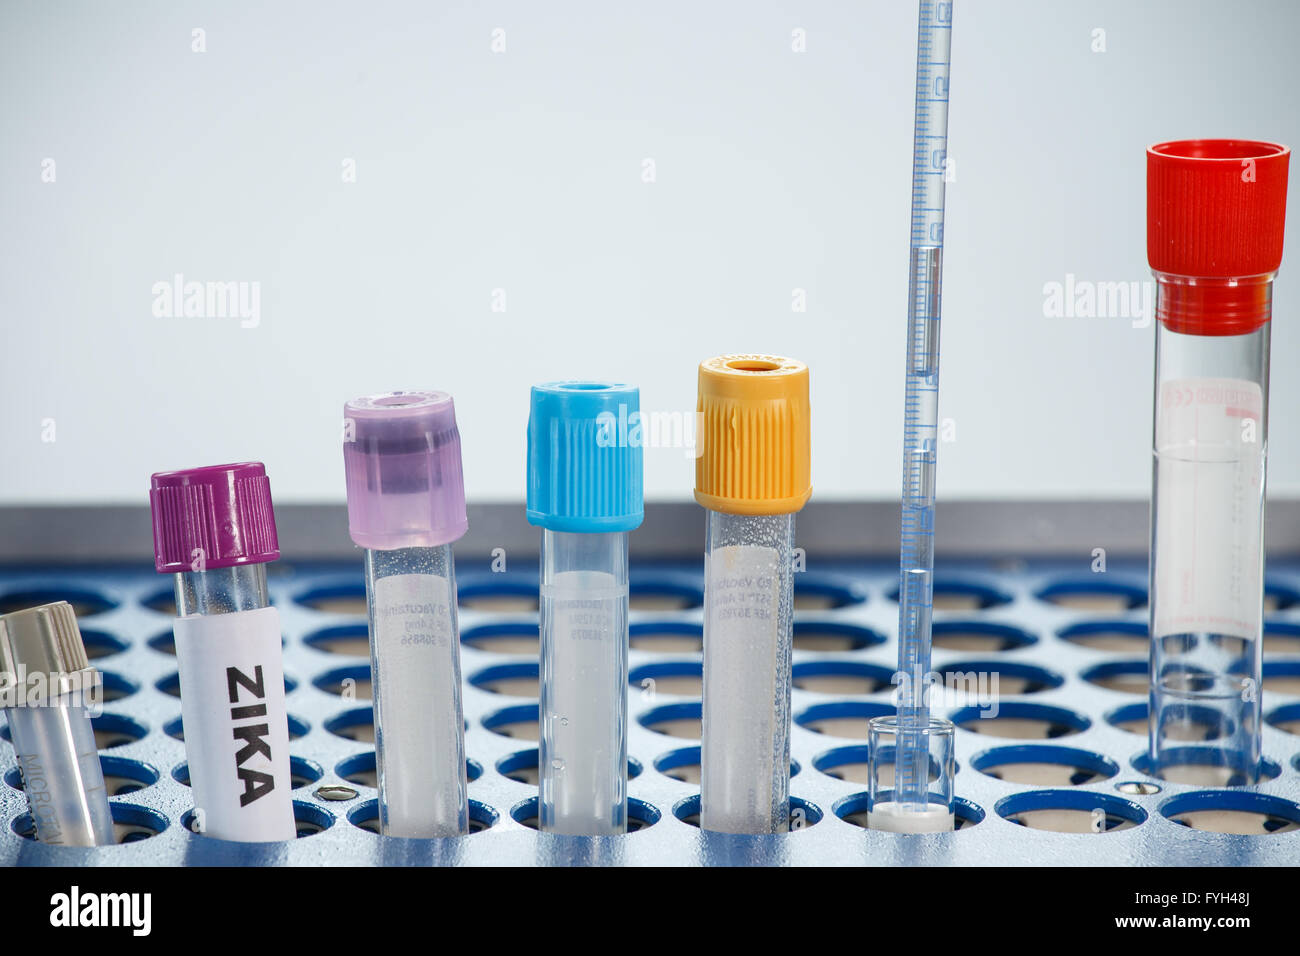 Test tube for analyzing ZIKA virus Stock Photo